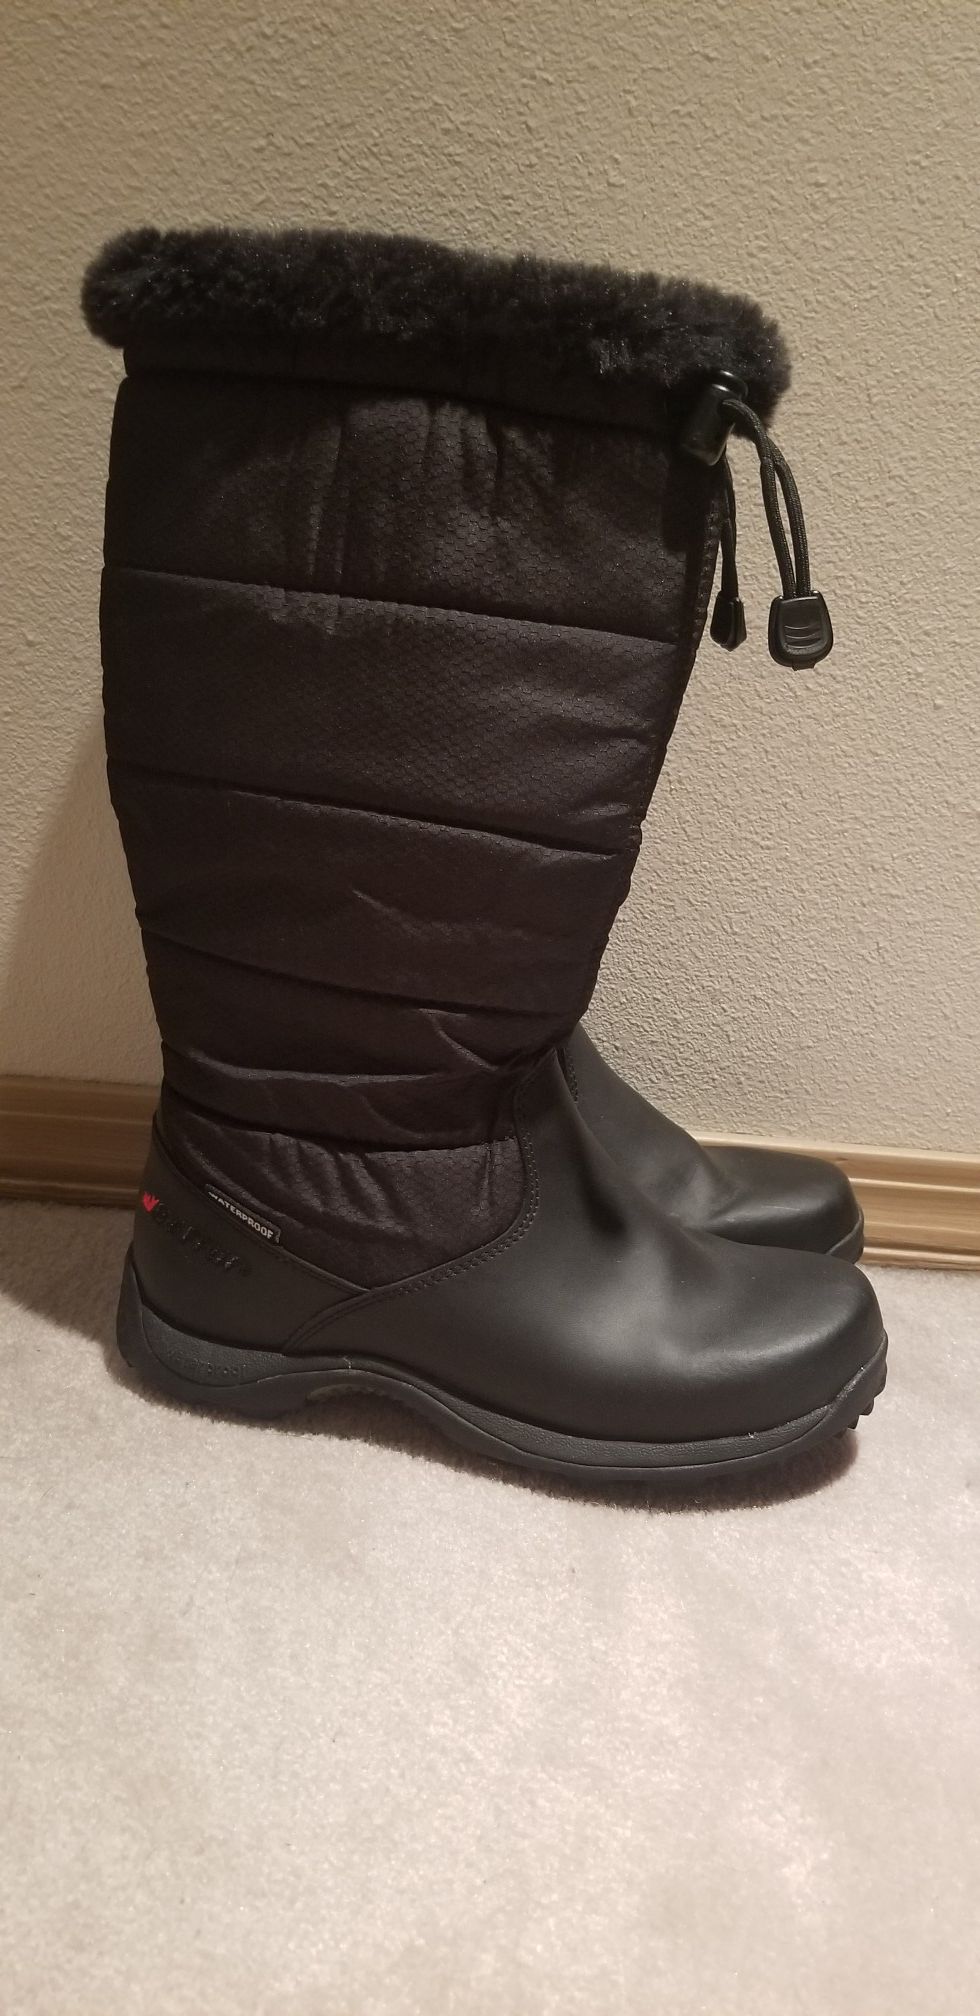 NEW Baffin Womens Winter Waterproof Boots size 8